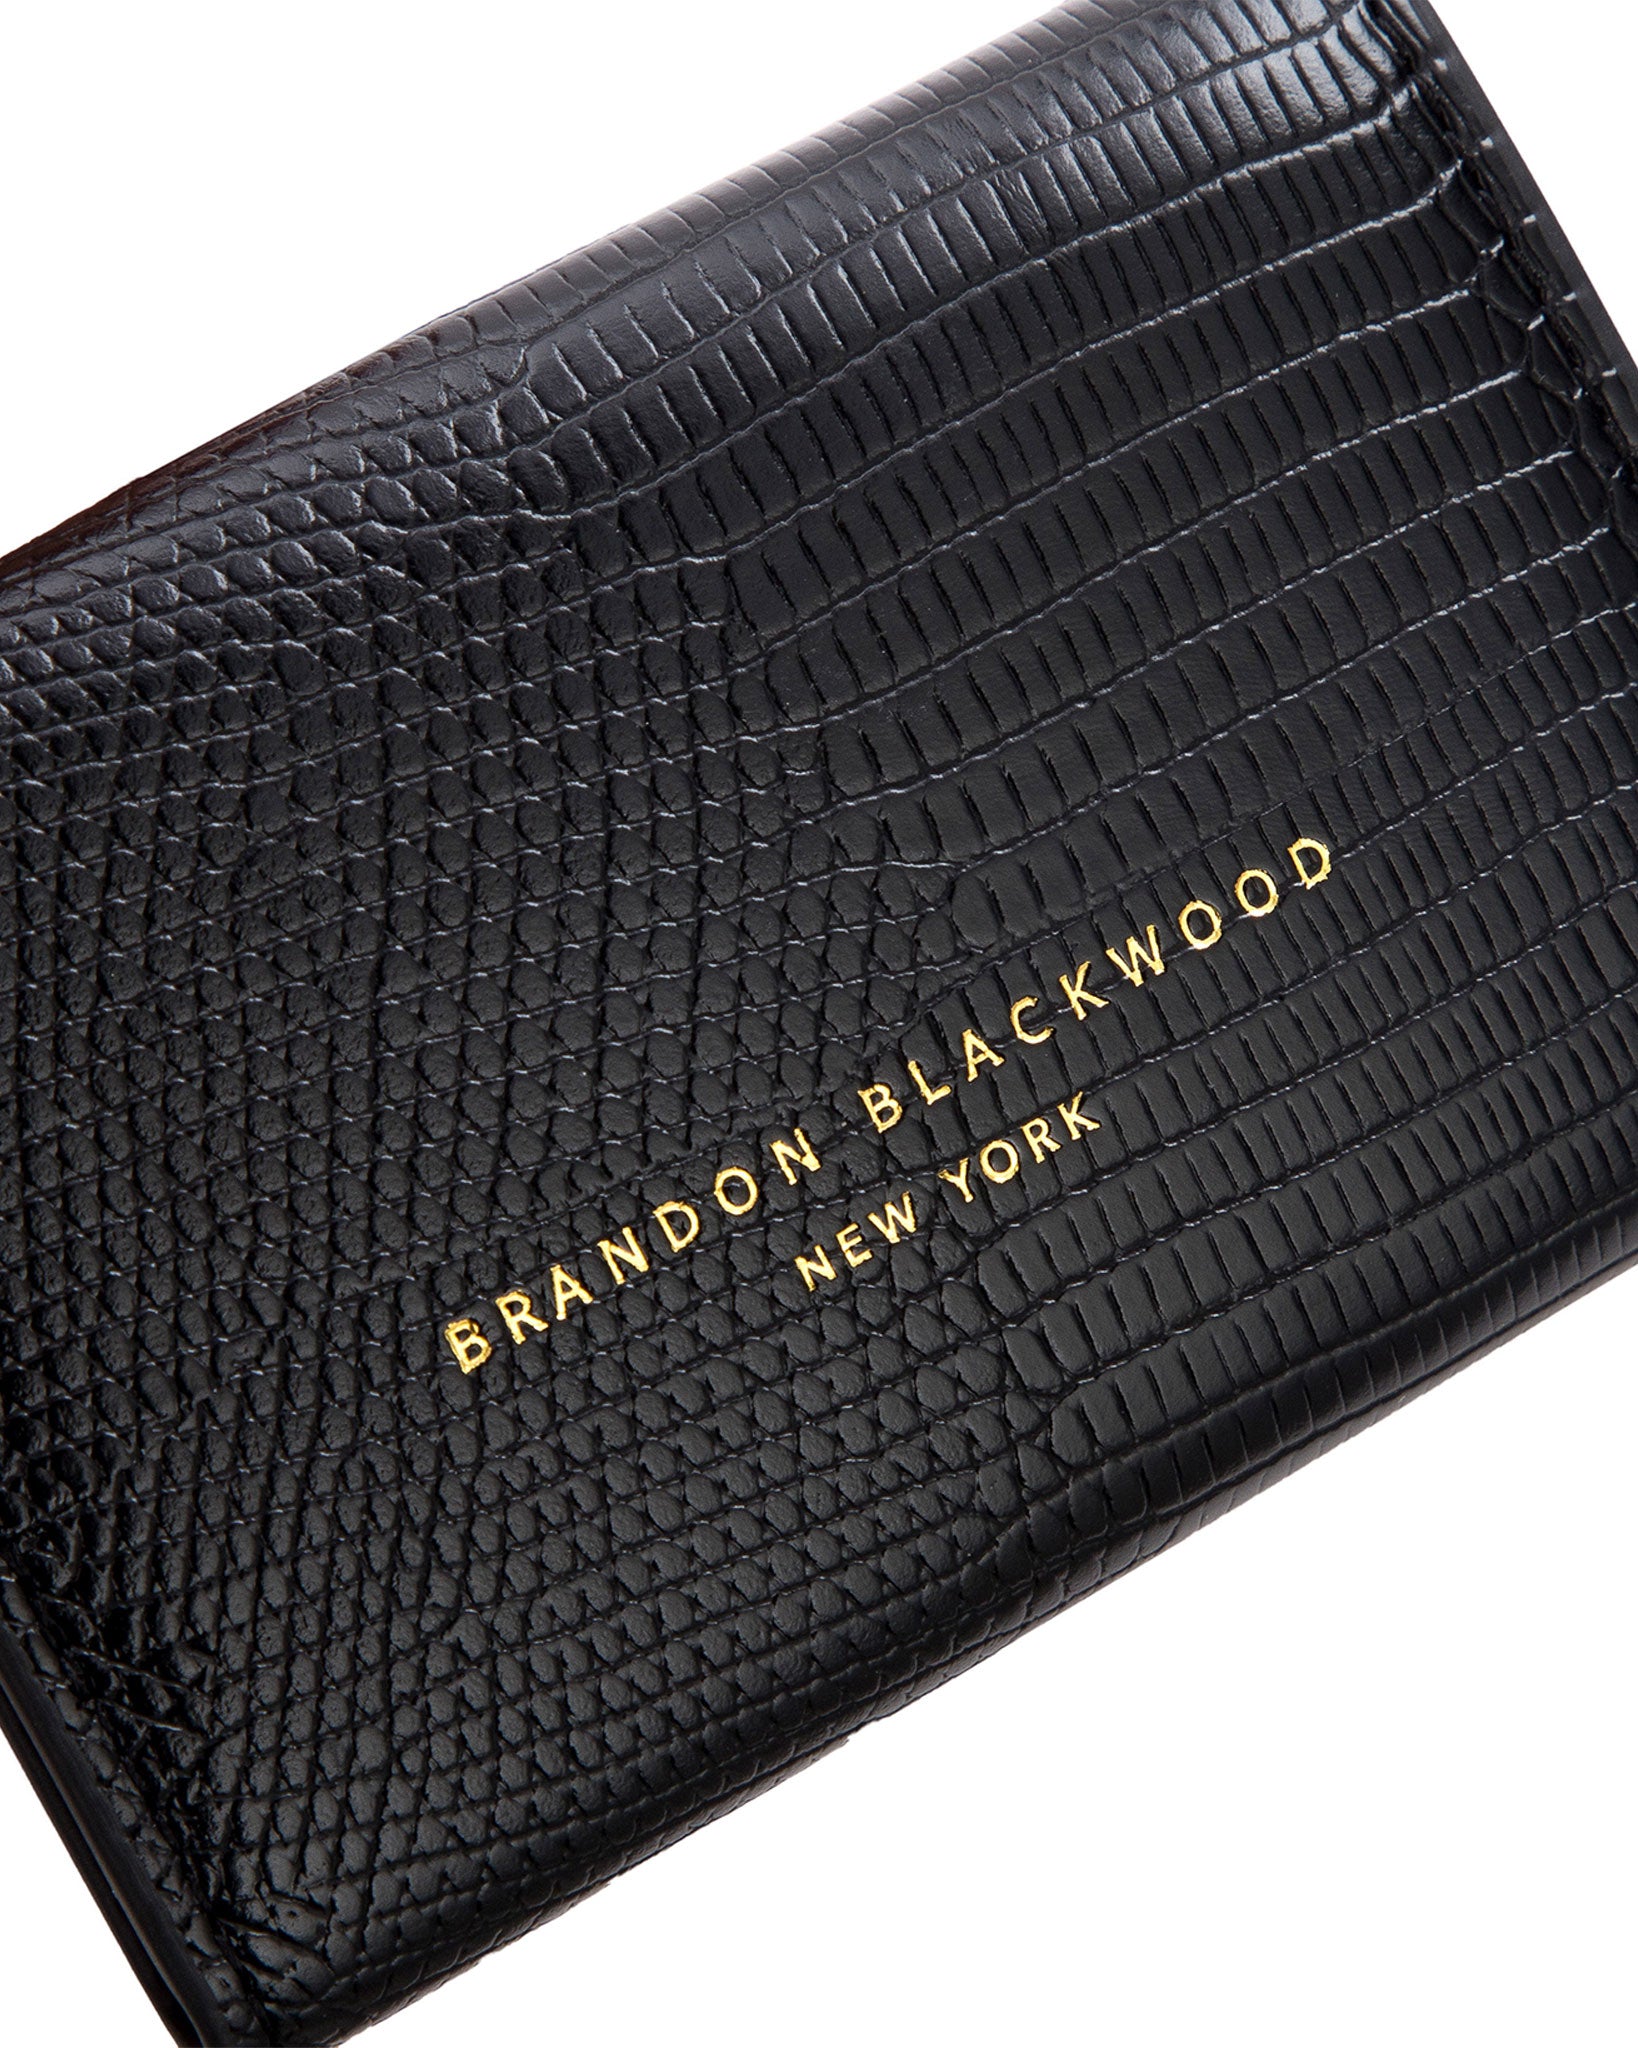 Brandon Blackwood New York - Neema Key Pouch - Black Lizard Embossed Leather